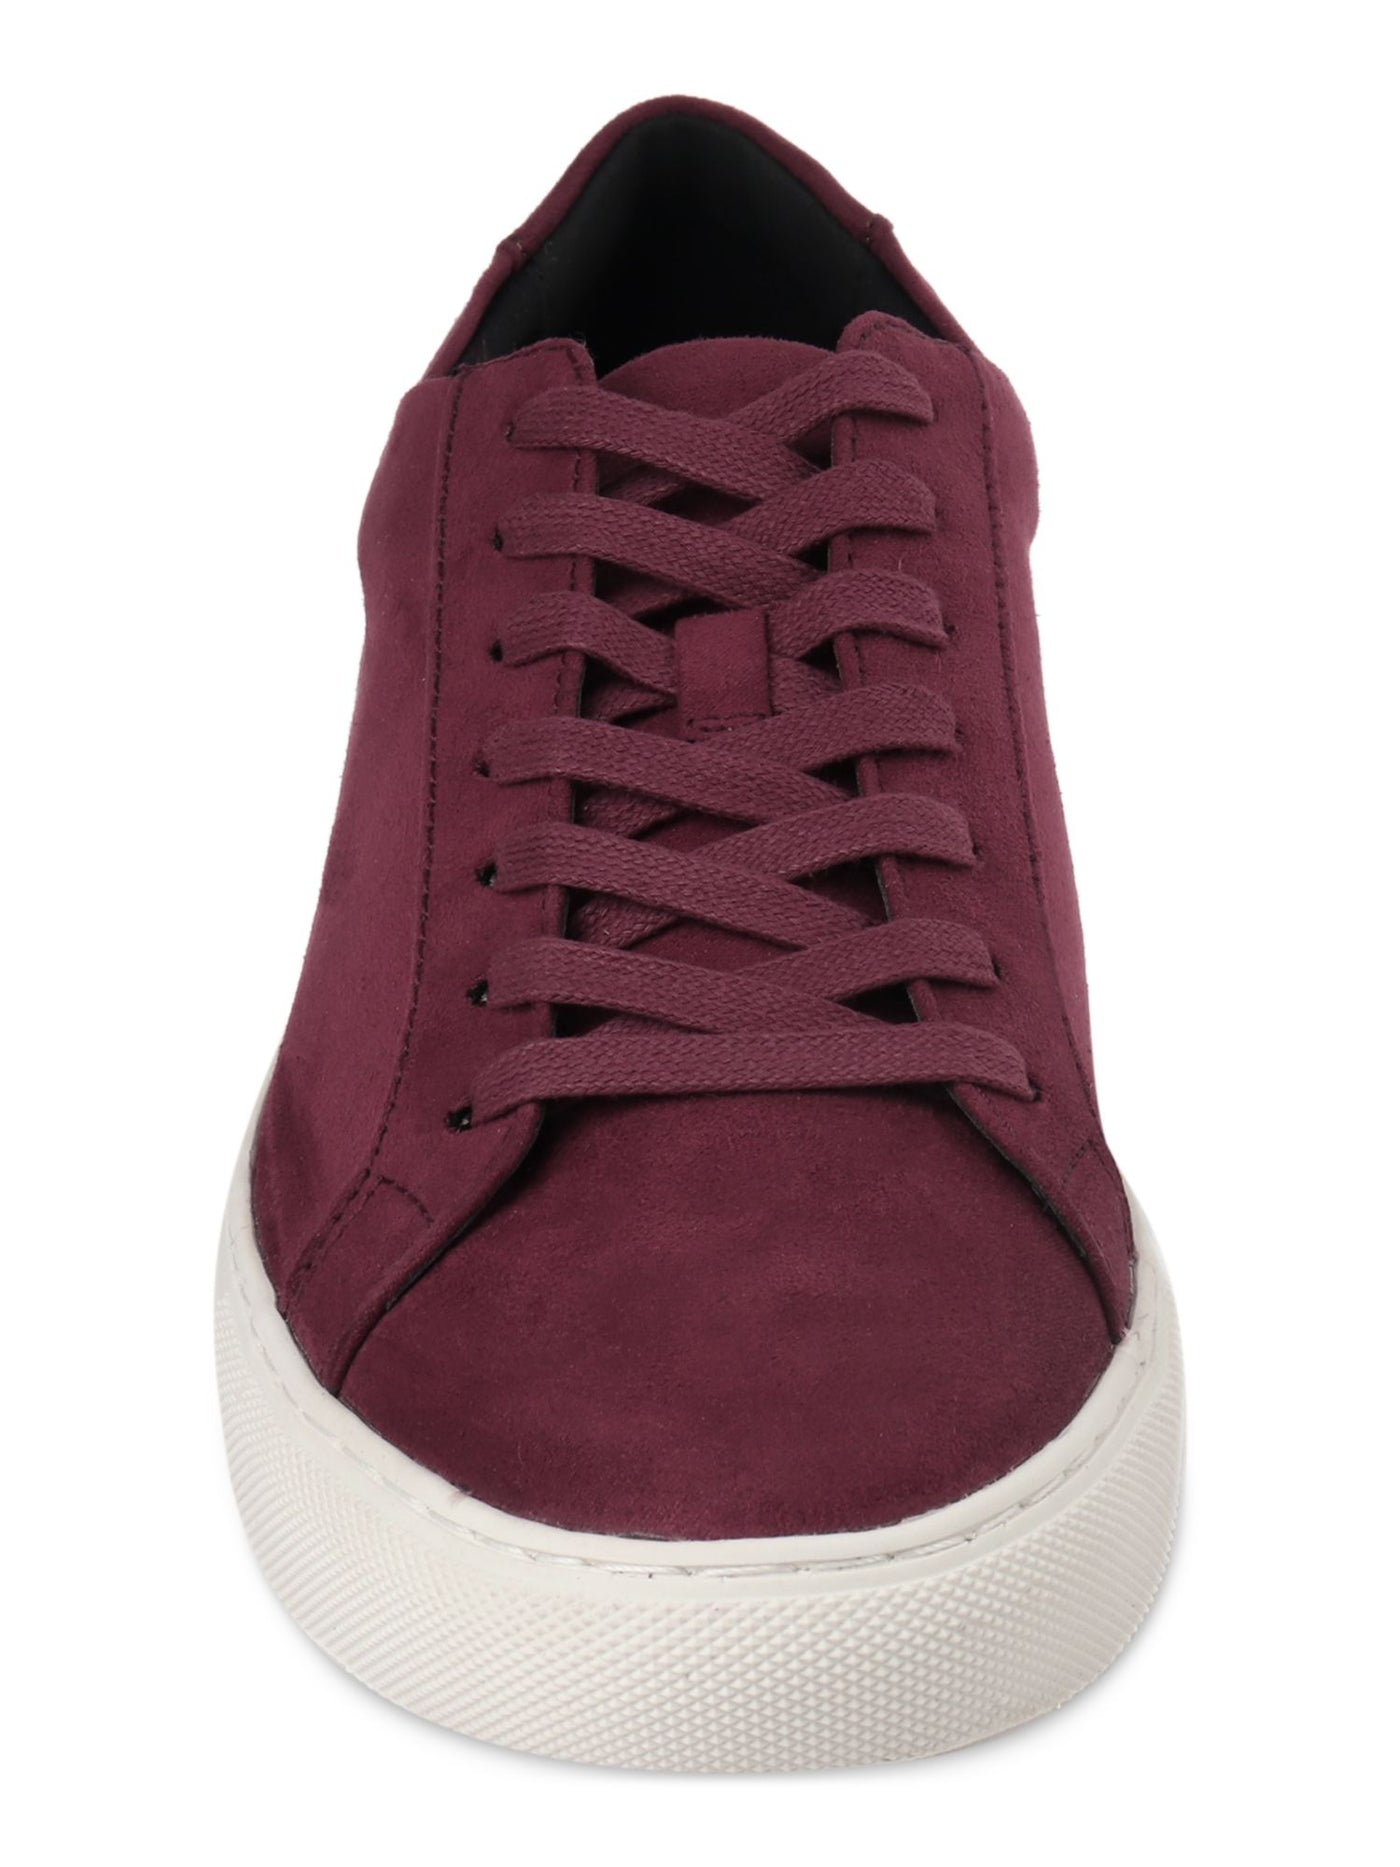 ALFANI Mens Burgundy Comfort Grayson Round Toe Platform Lace-Up Athletic Sneakers Shoes 7.5 M